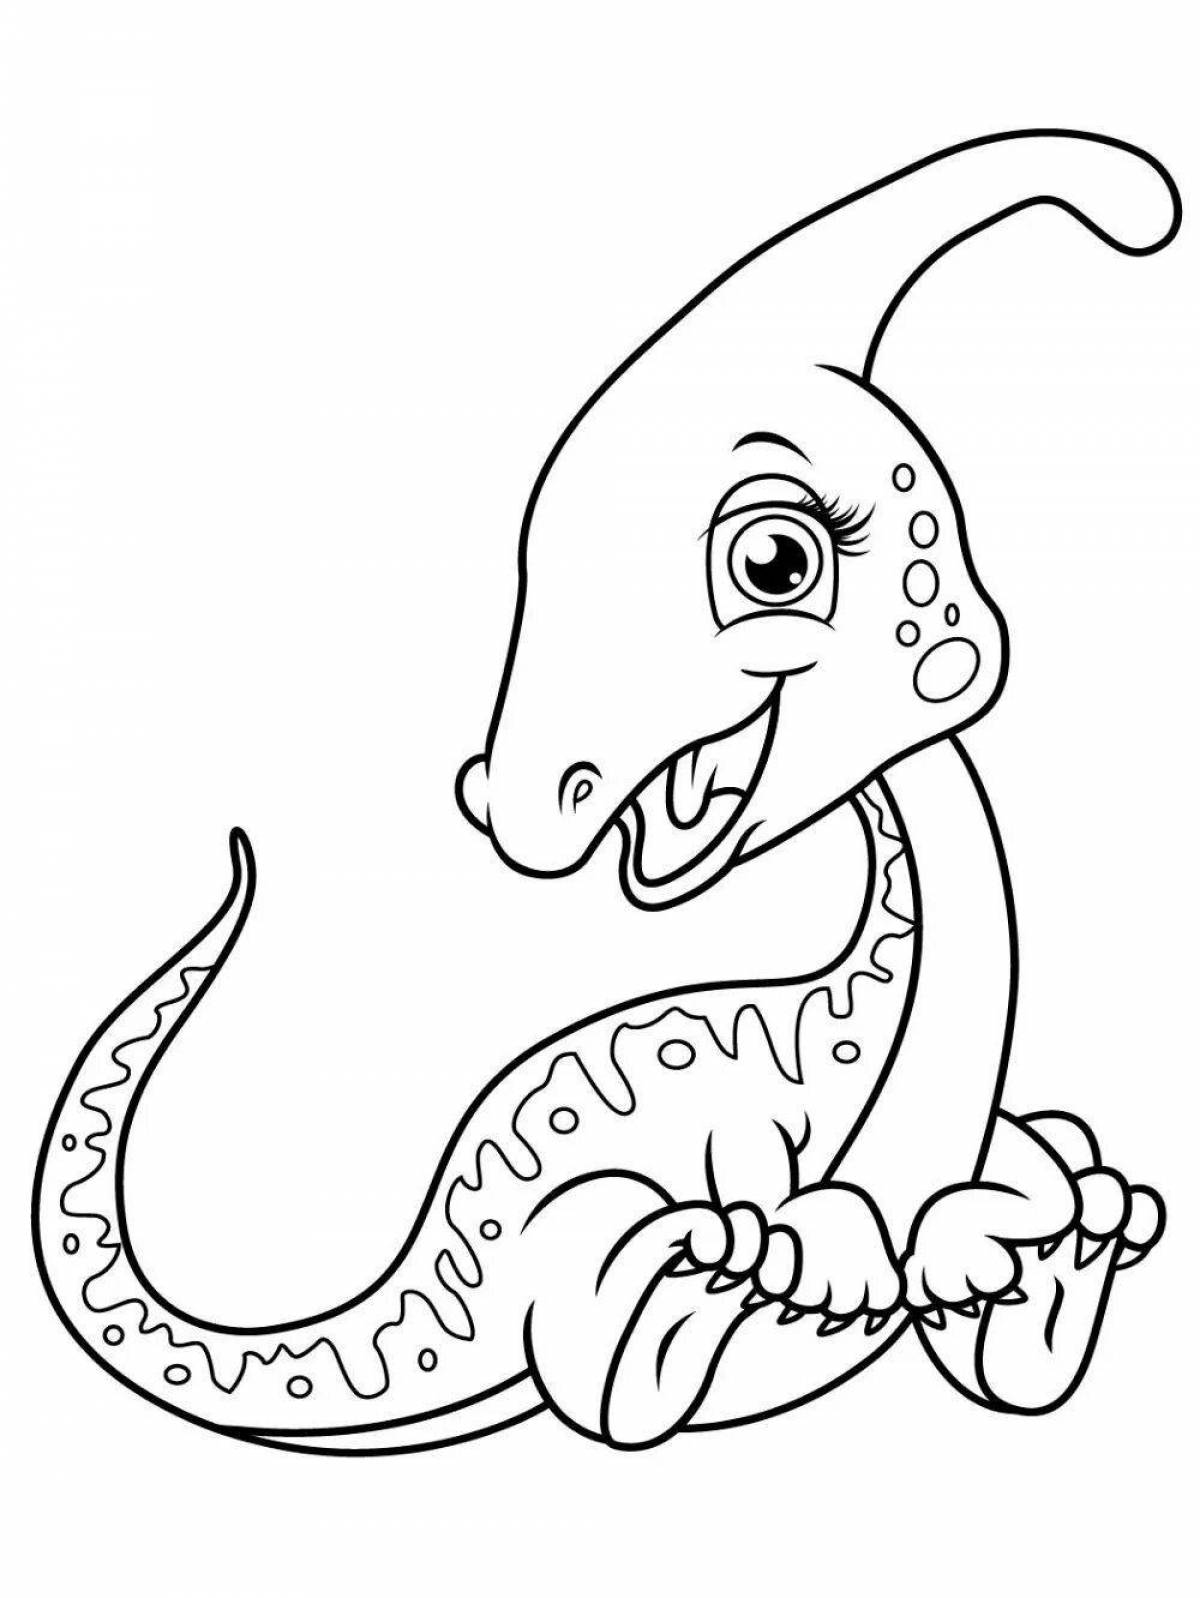 Coloring page quirky cartoon dinosaur